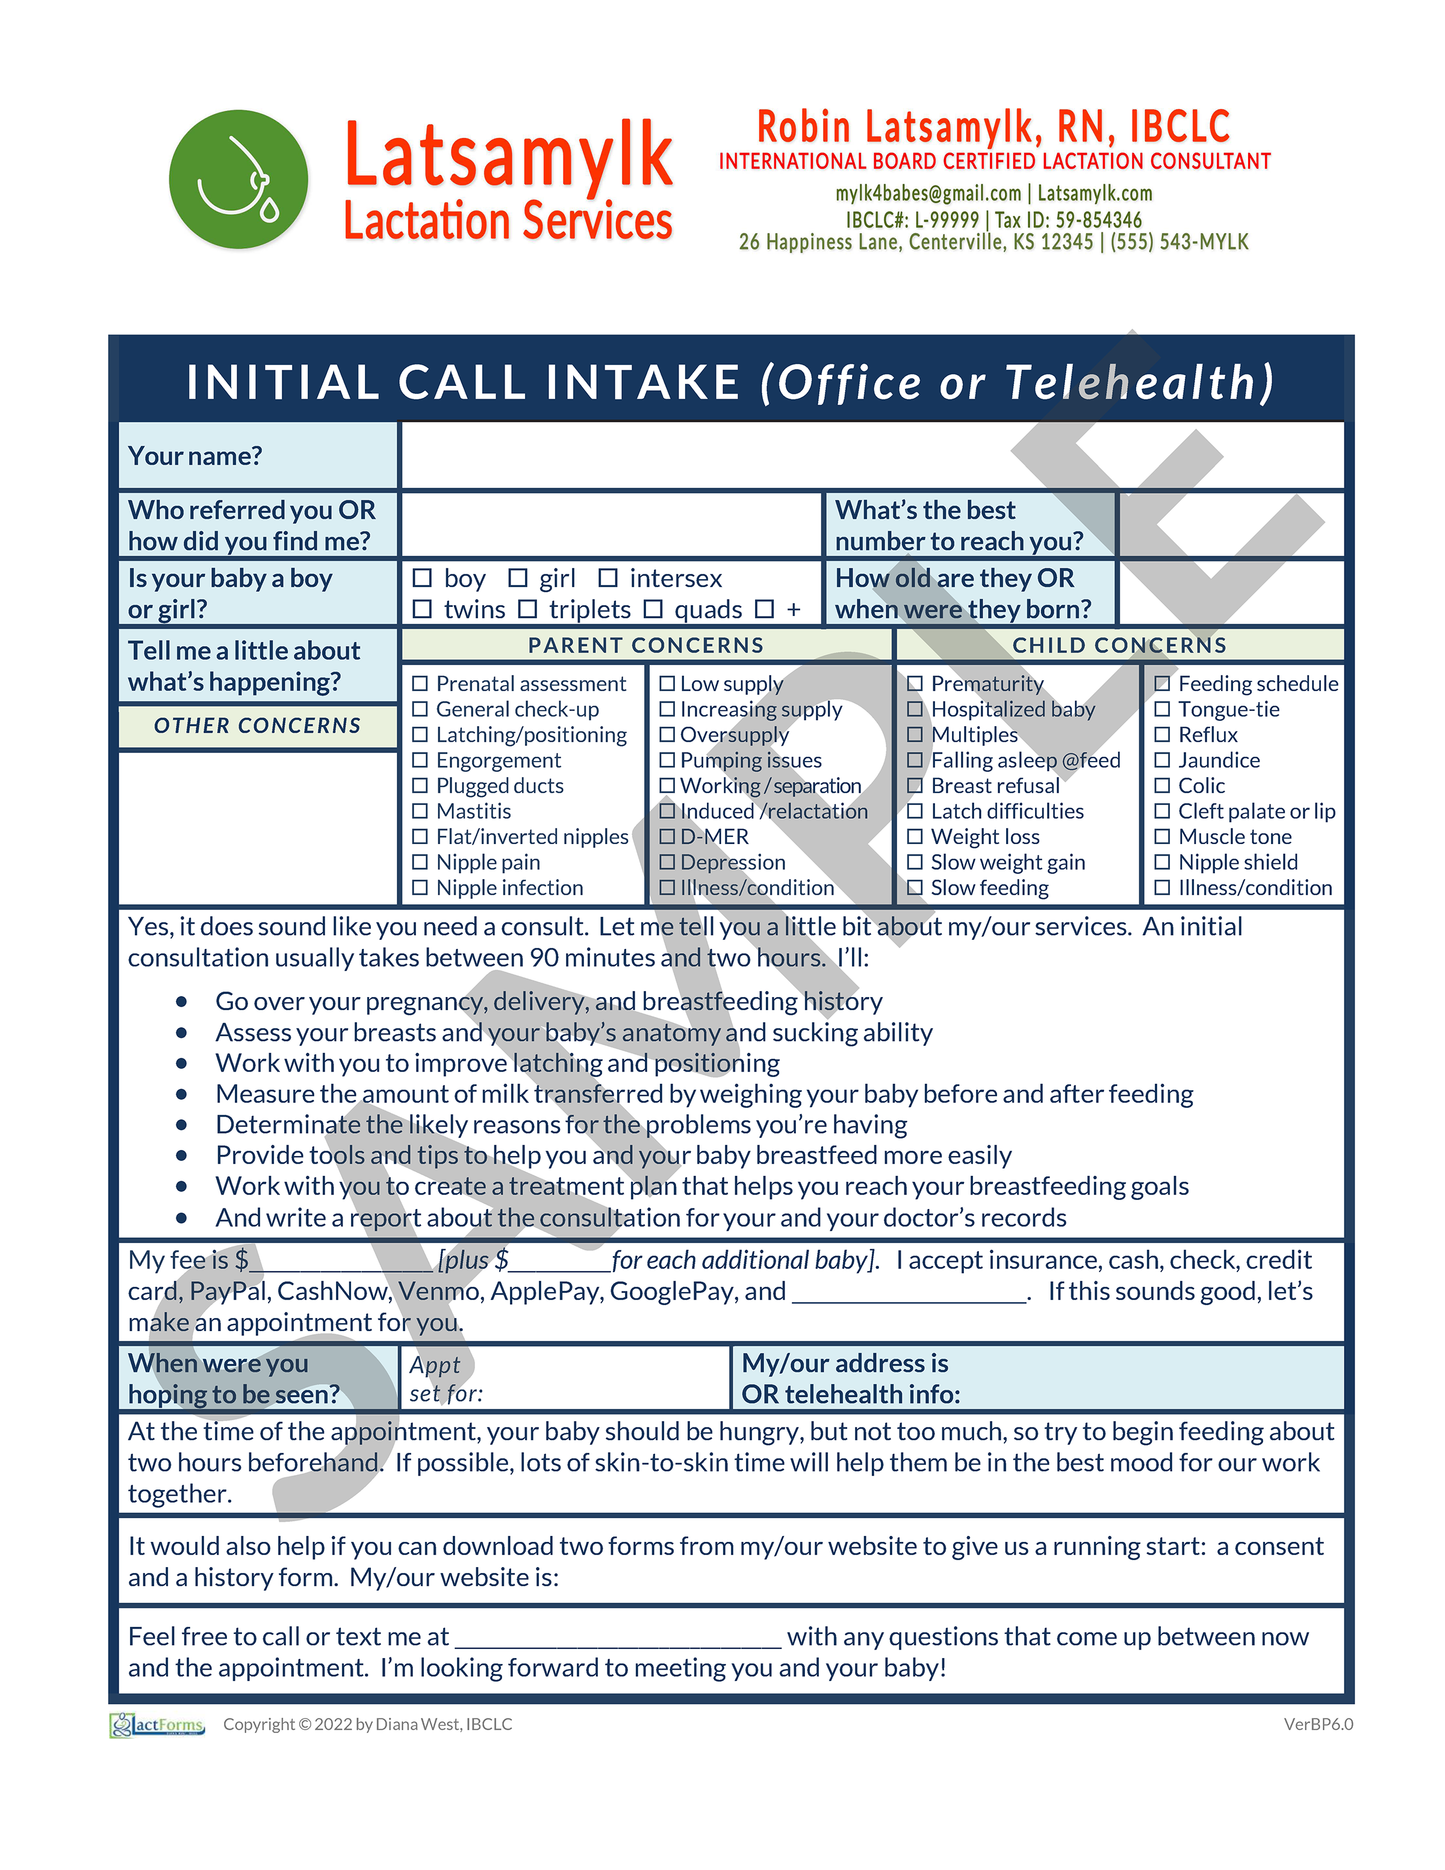 Intake Form—Office/Telehealth Visit